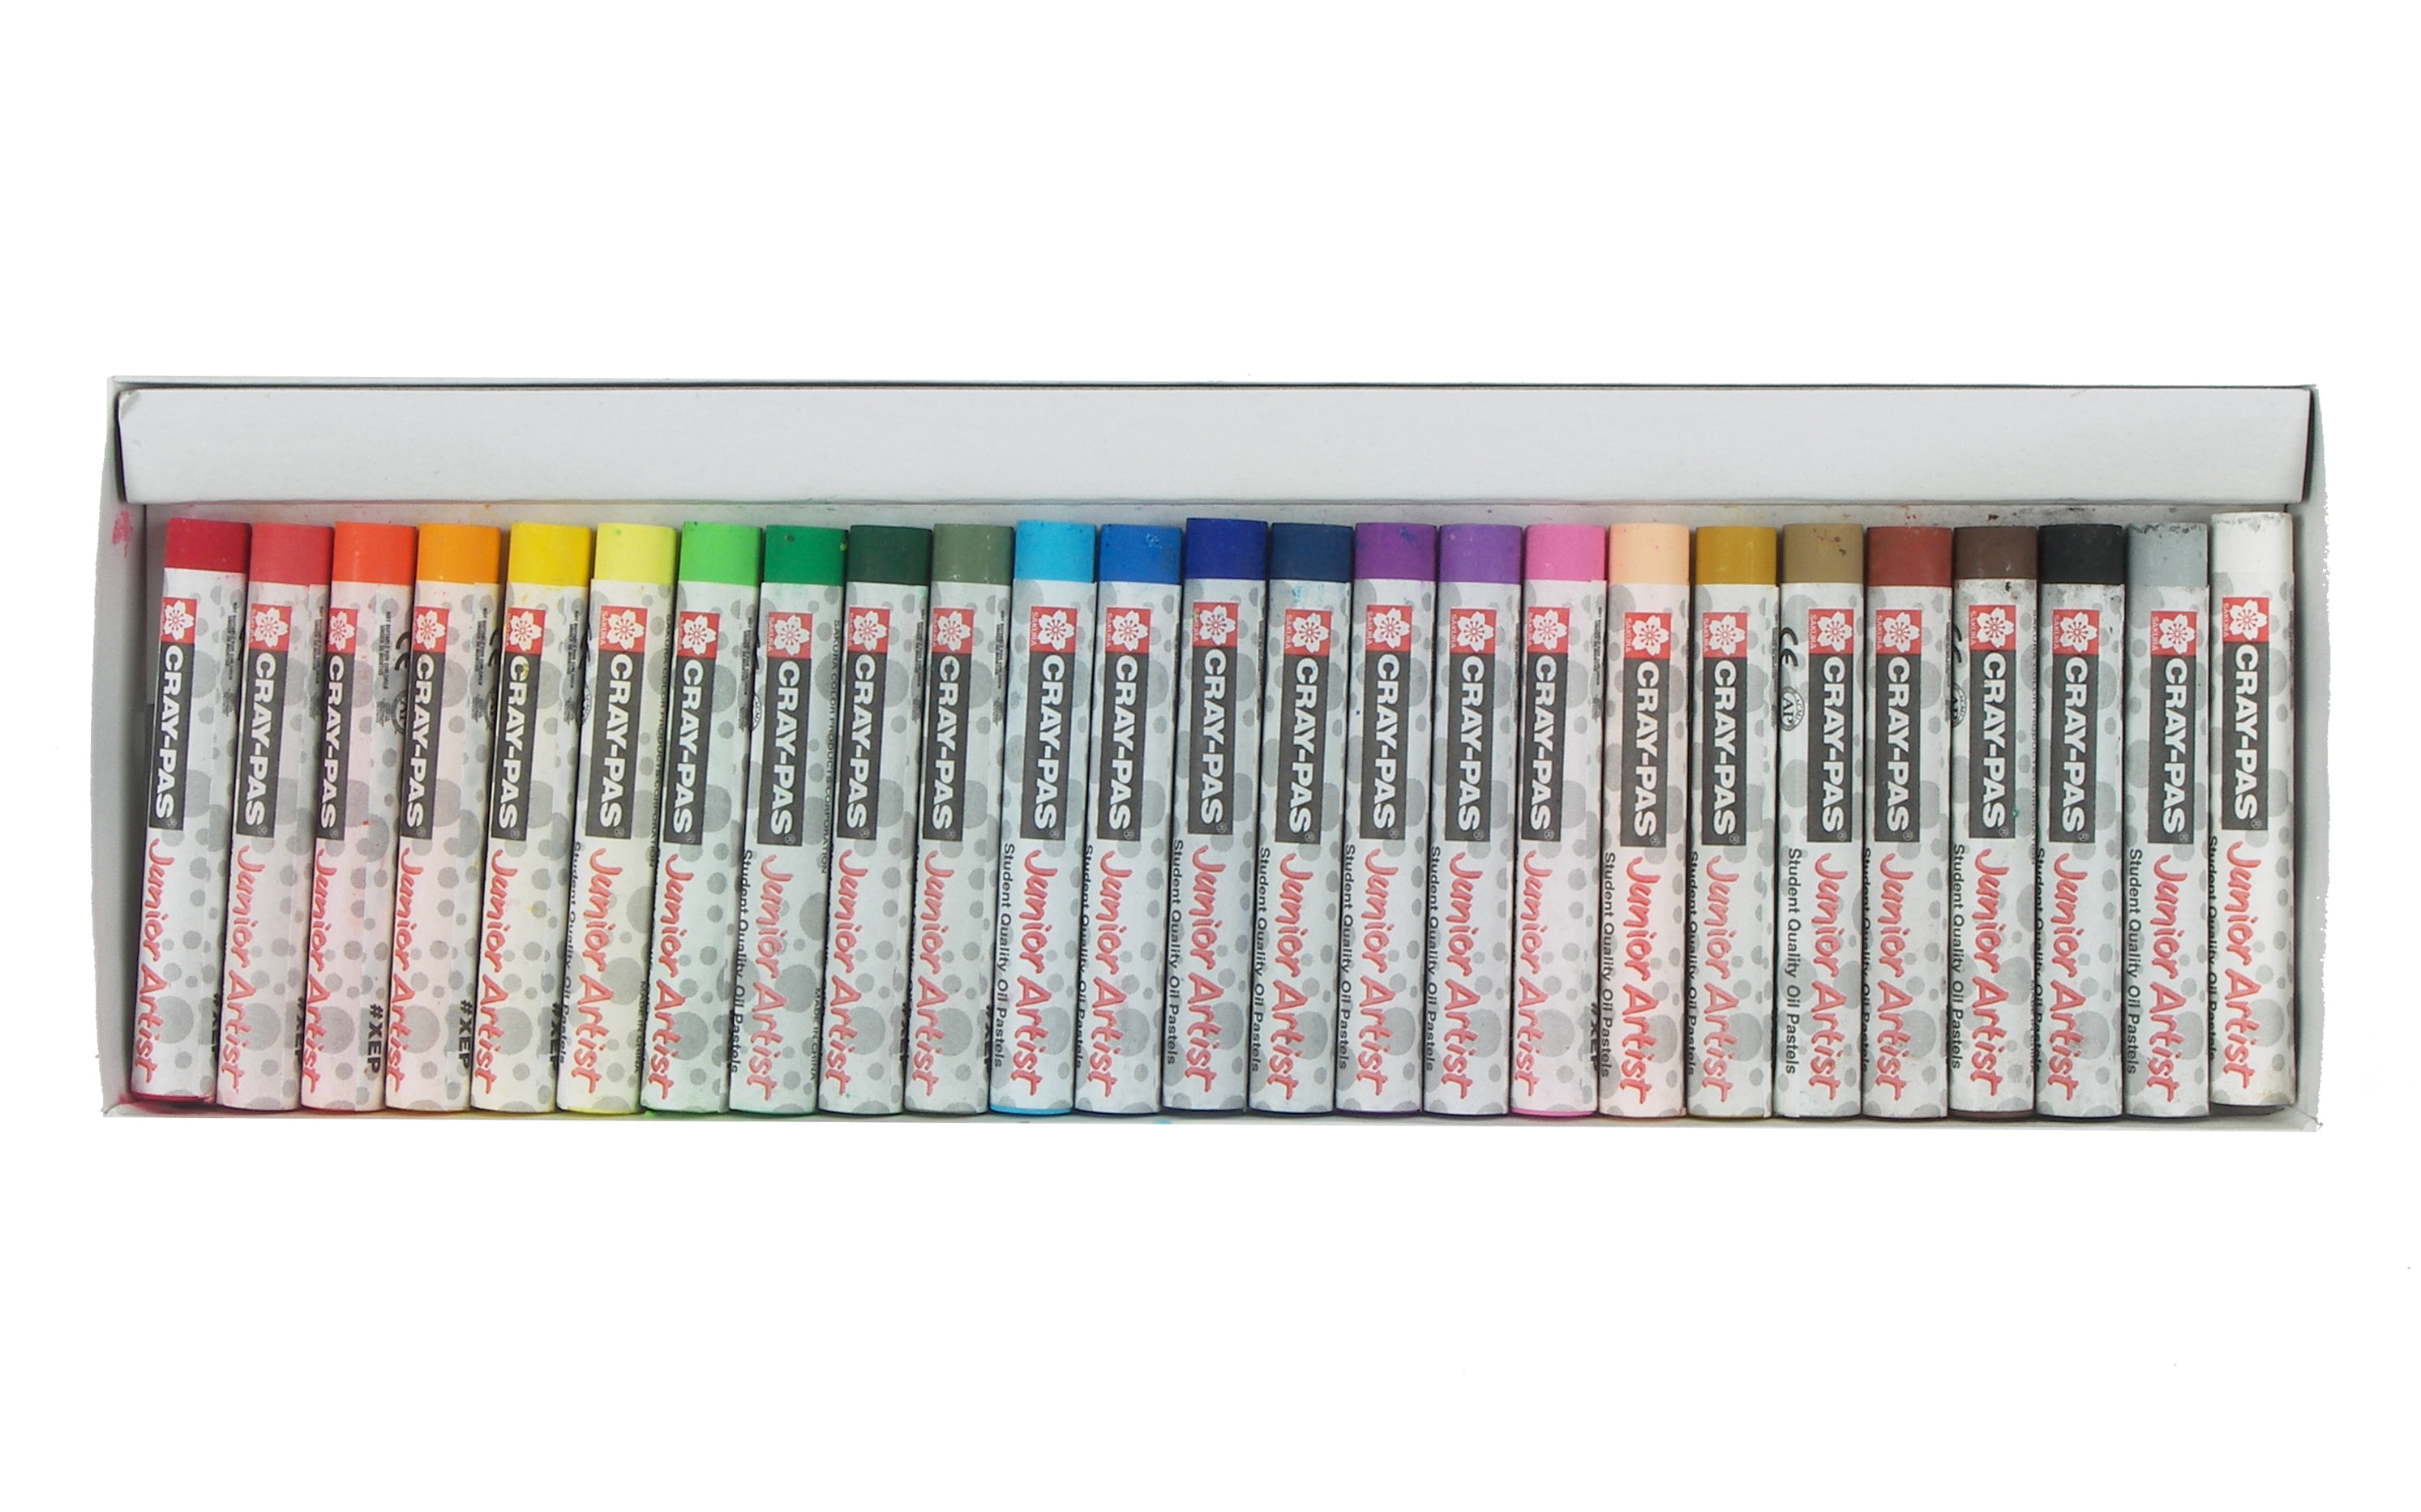 Cray-Pas Crayon Set – Mettowee Mint